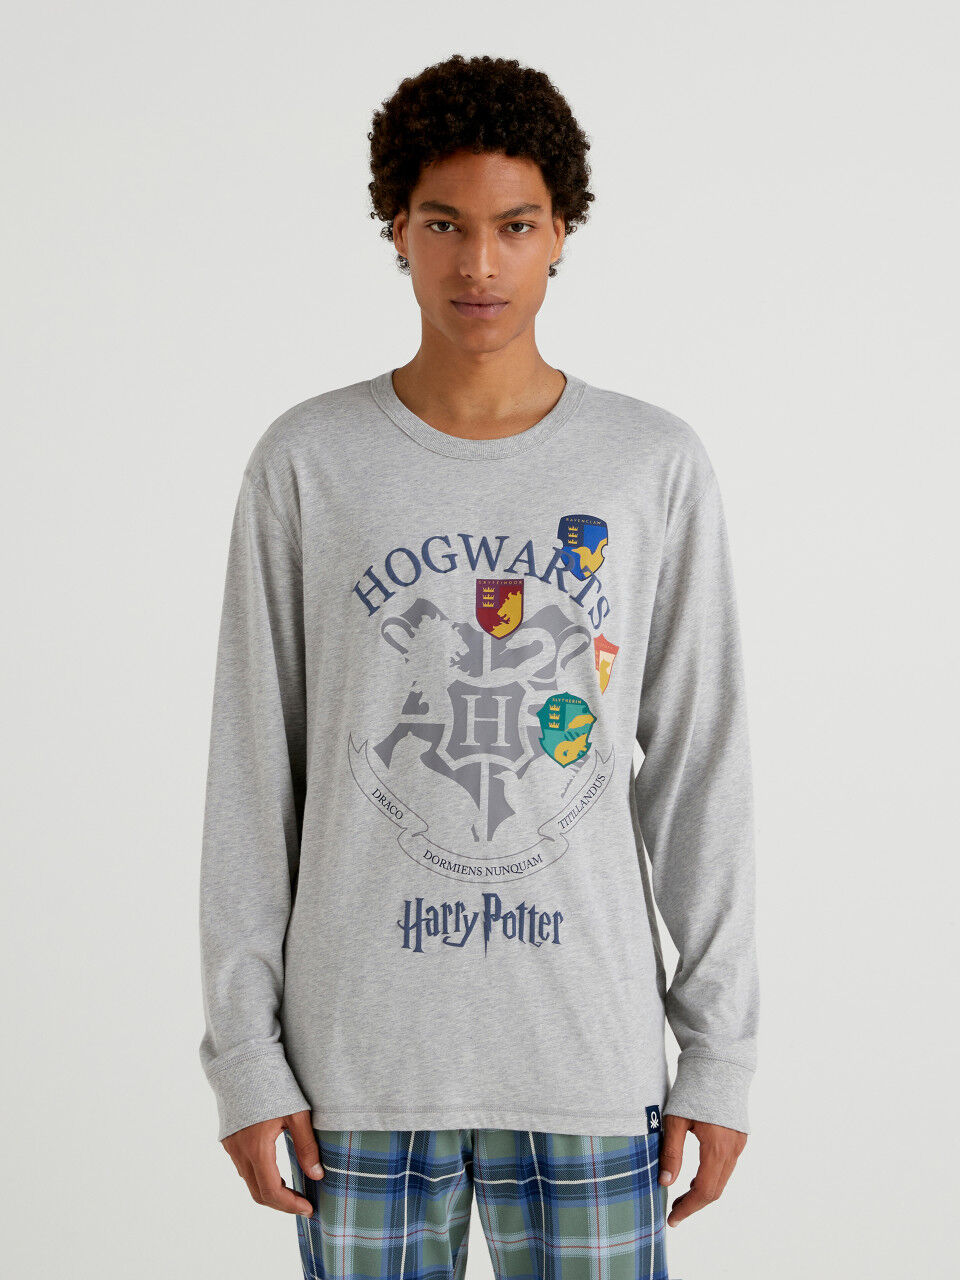 Camiseta de Harry Potter de algodón de fibra larga